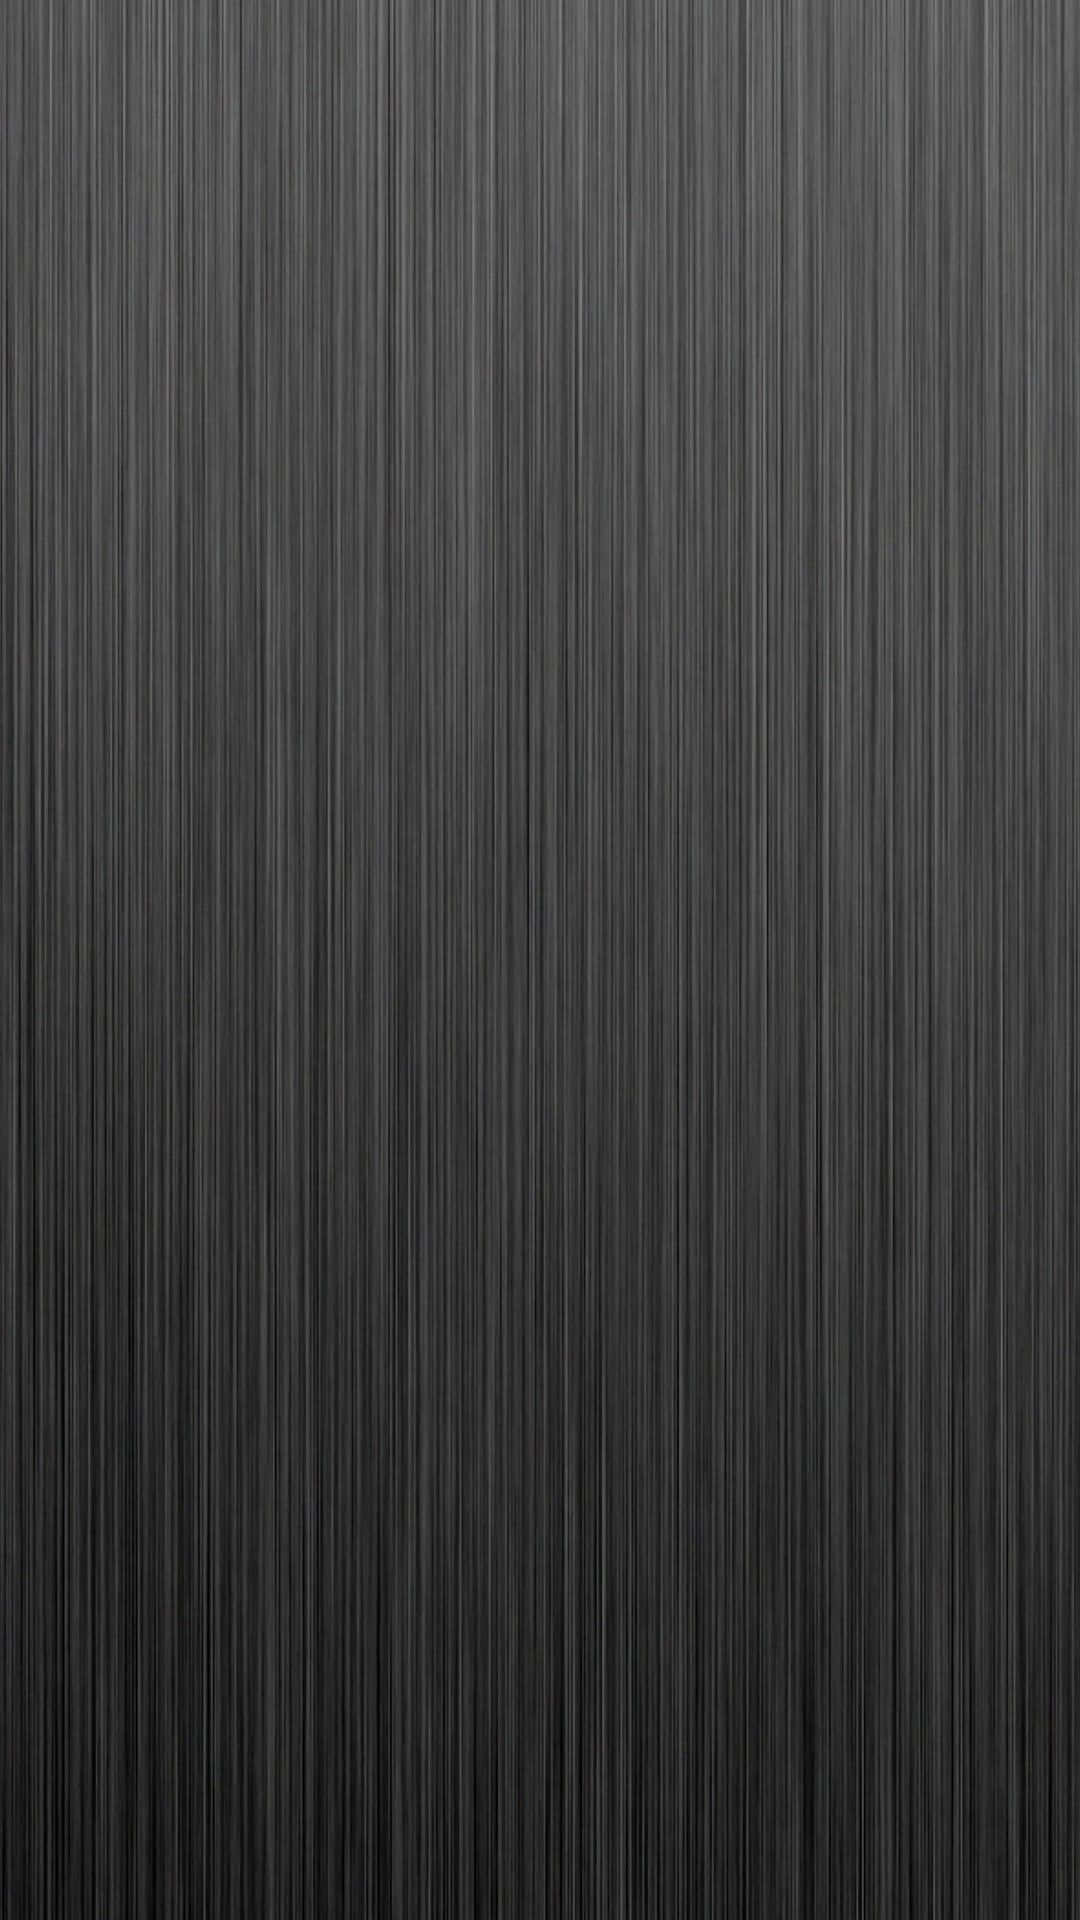 A classic plus opulent dark gray wall Wallpaper